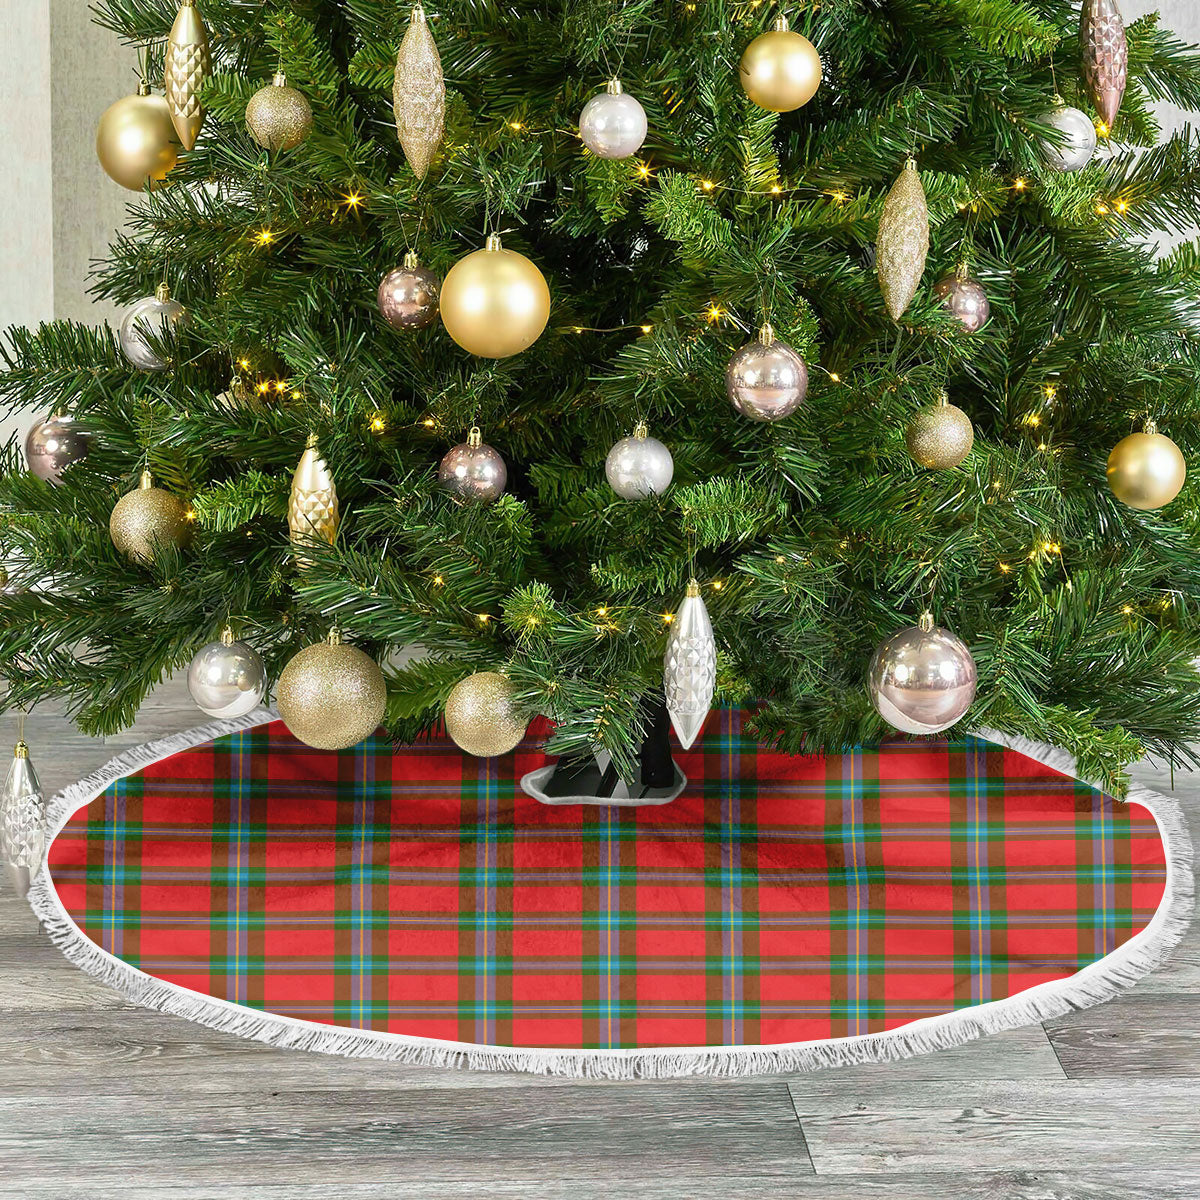 MacLaine of Loch Buie Tartan Christmas Tree Skirt